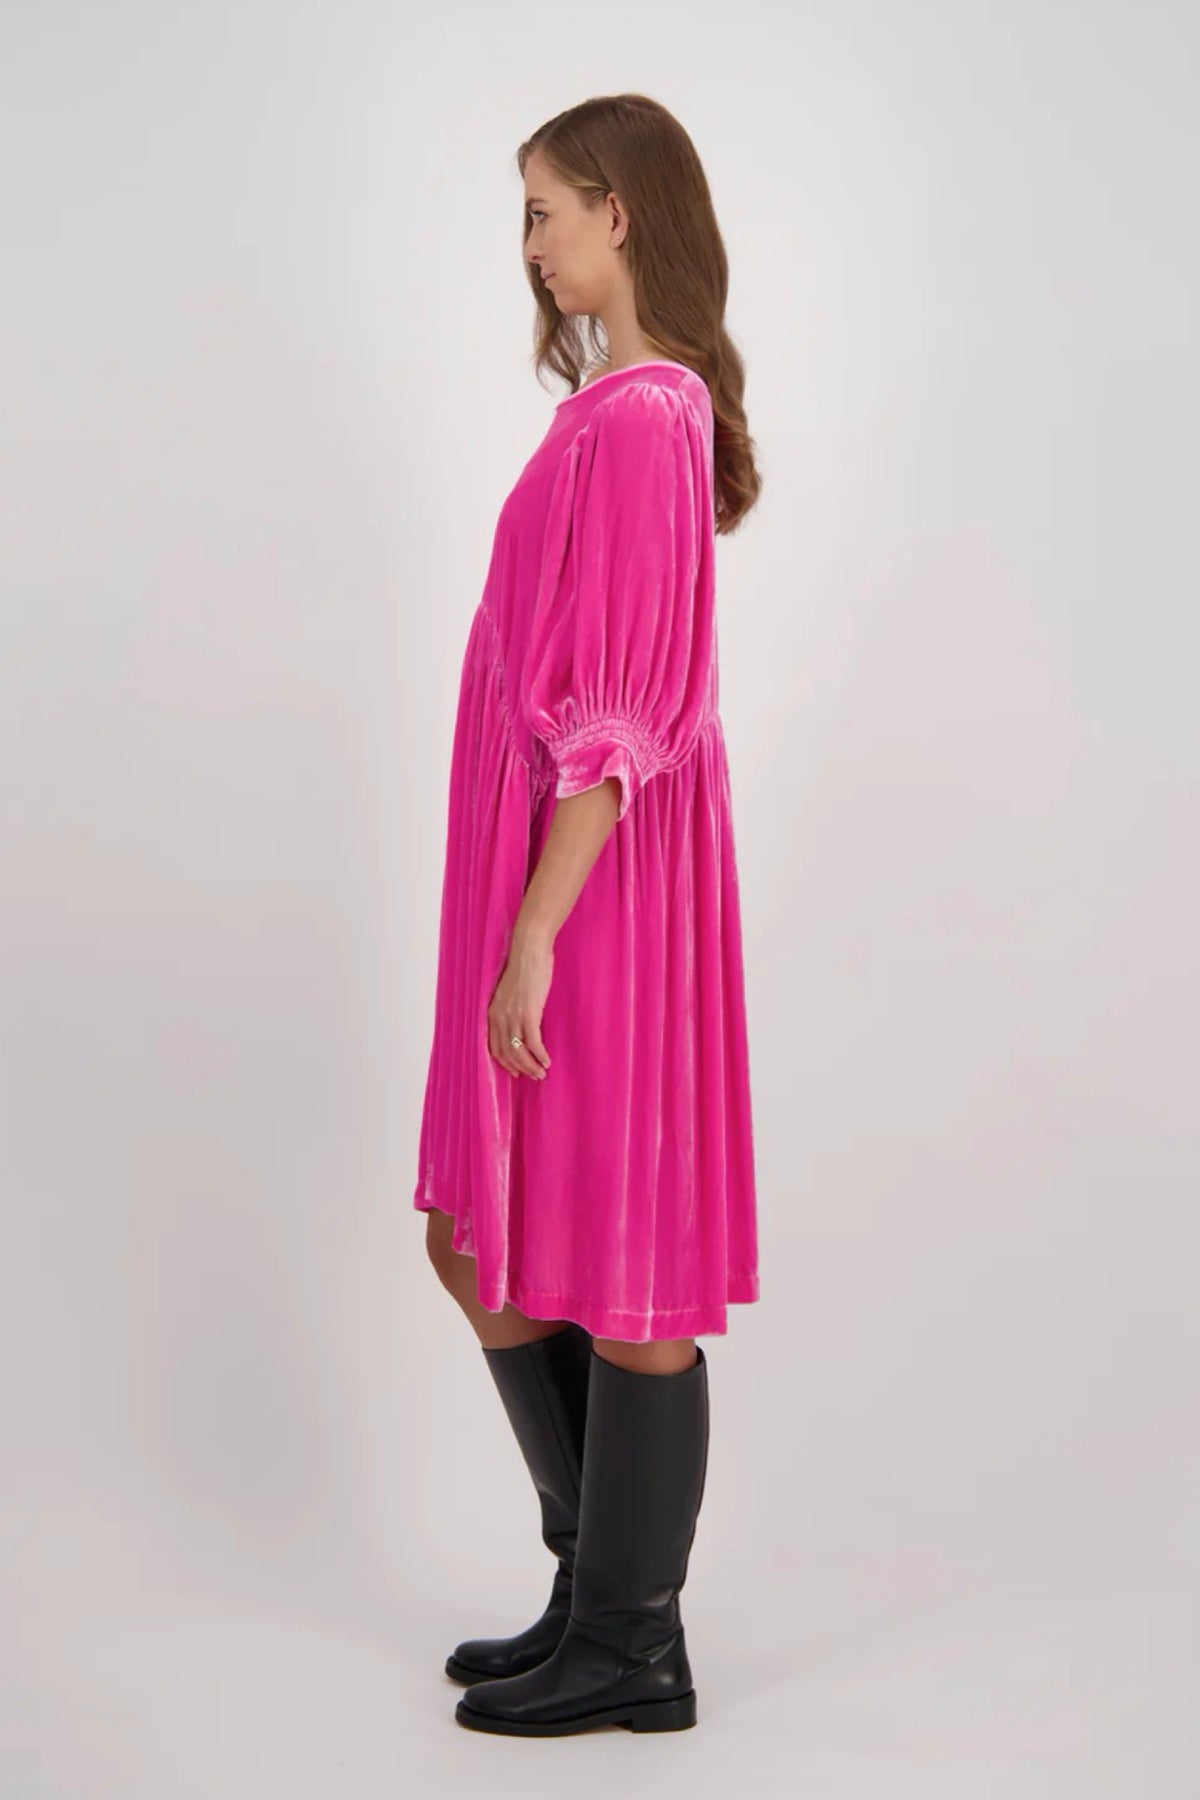 Cleapatra Pink Velvet Dress